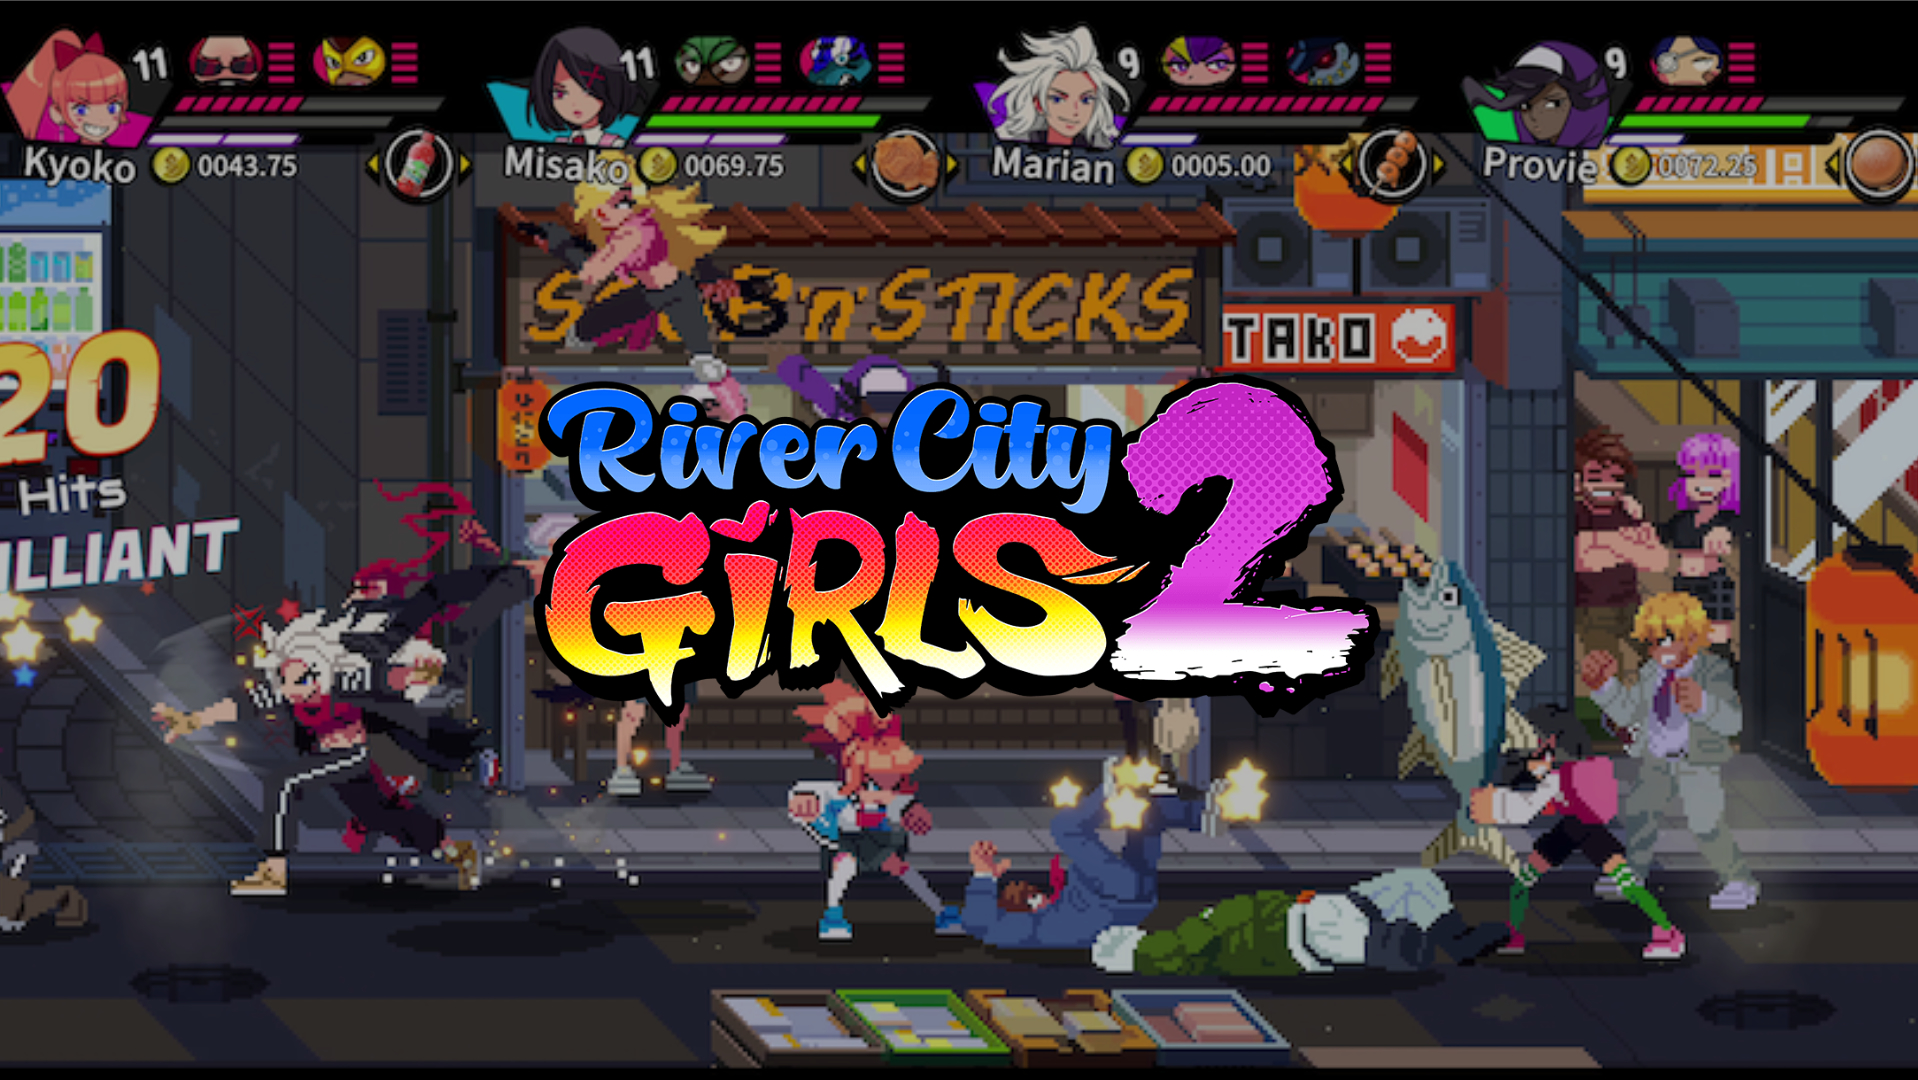 River City Girls 2 update adds 4-player online co-op